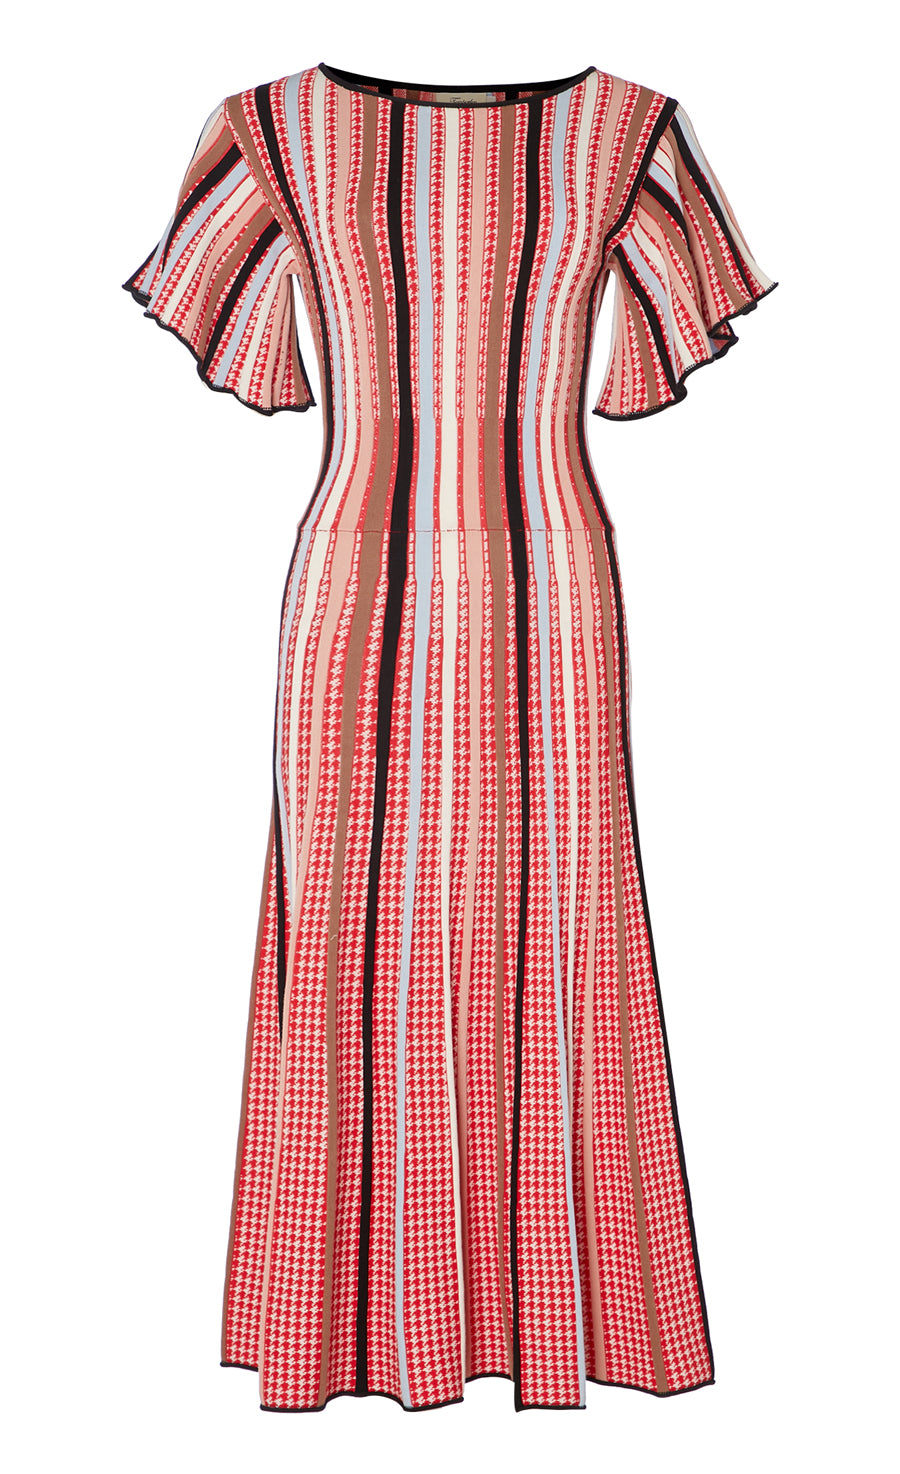 Vulcan Knit Dress - Poppy Red Mix